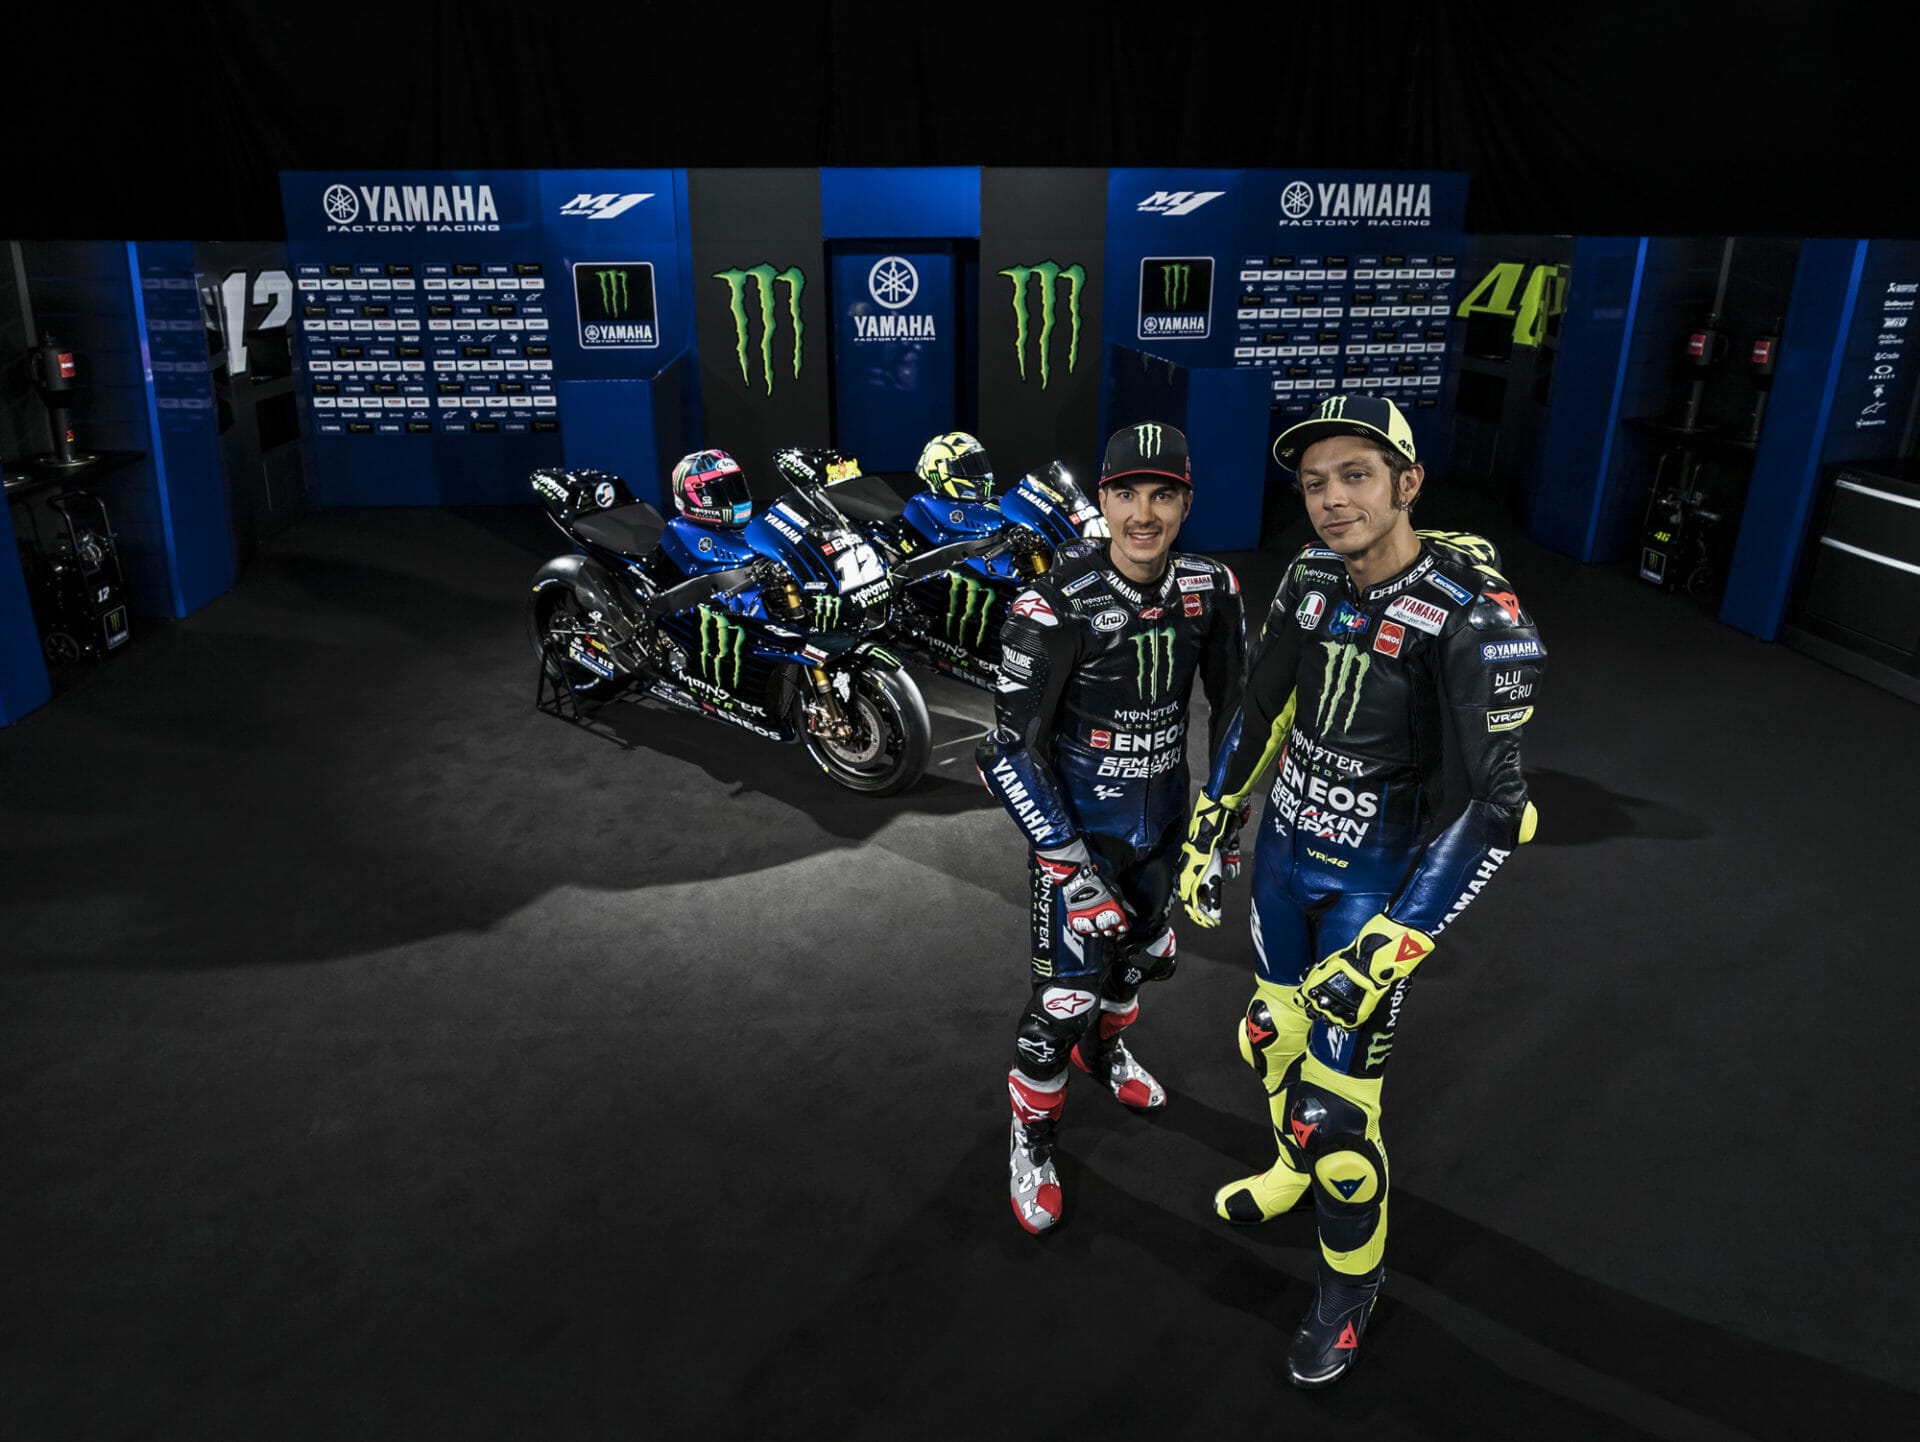 MotoGP - Two Crewchiefs in Quarantine
- also in the MOTORCYCLES.NEWS APP